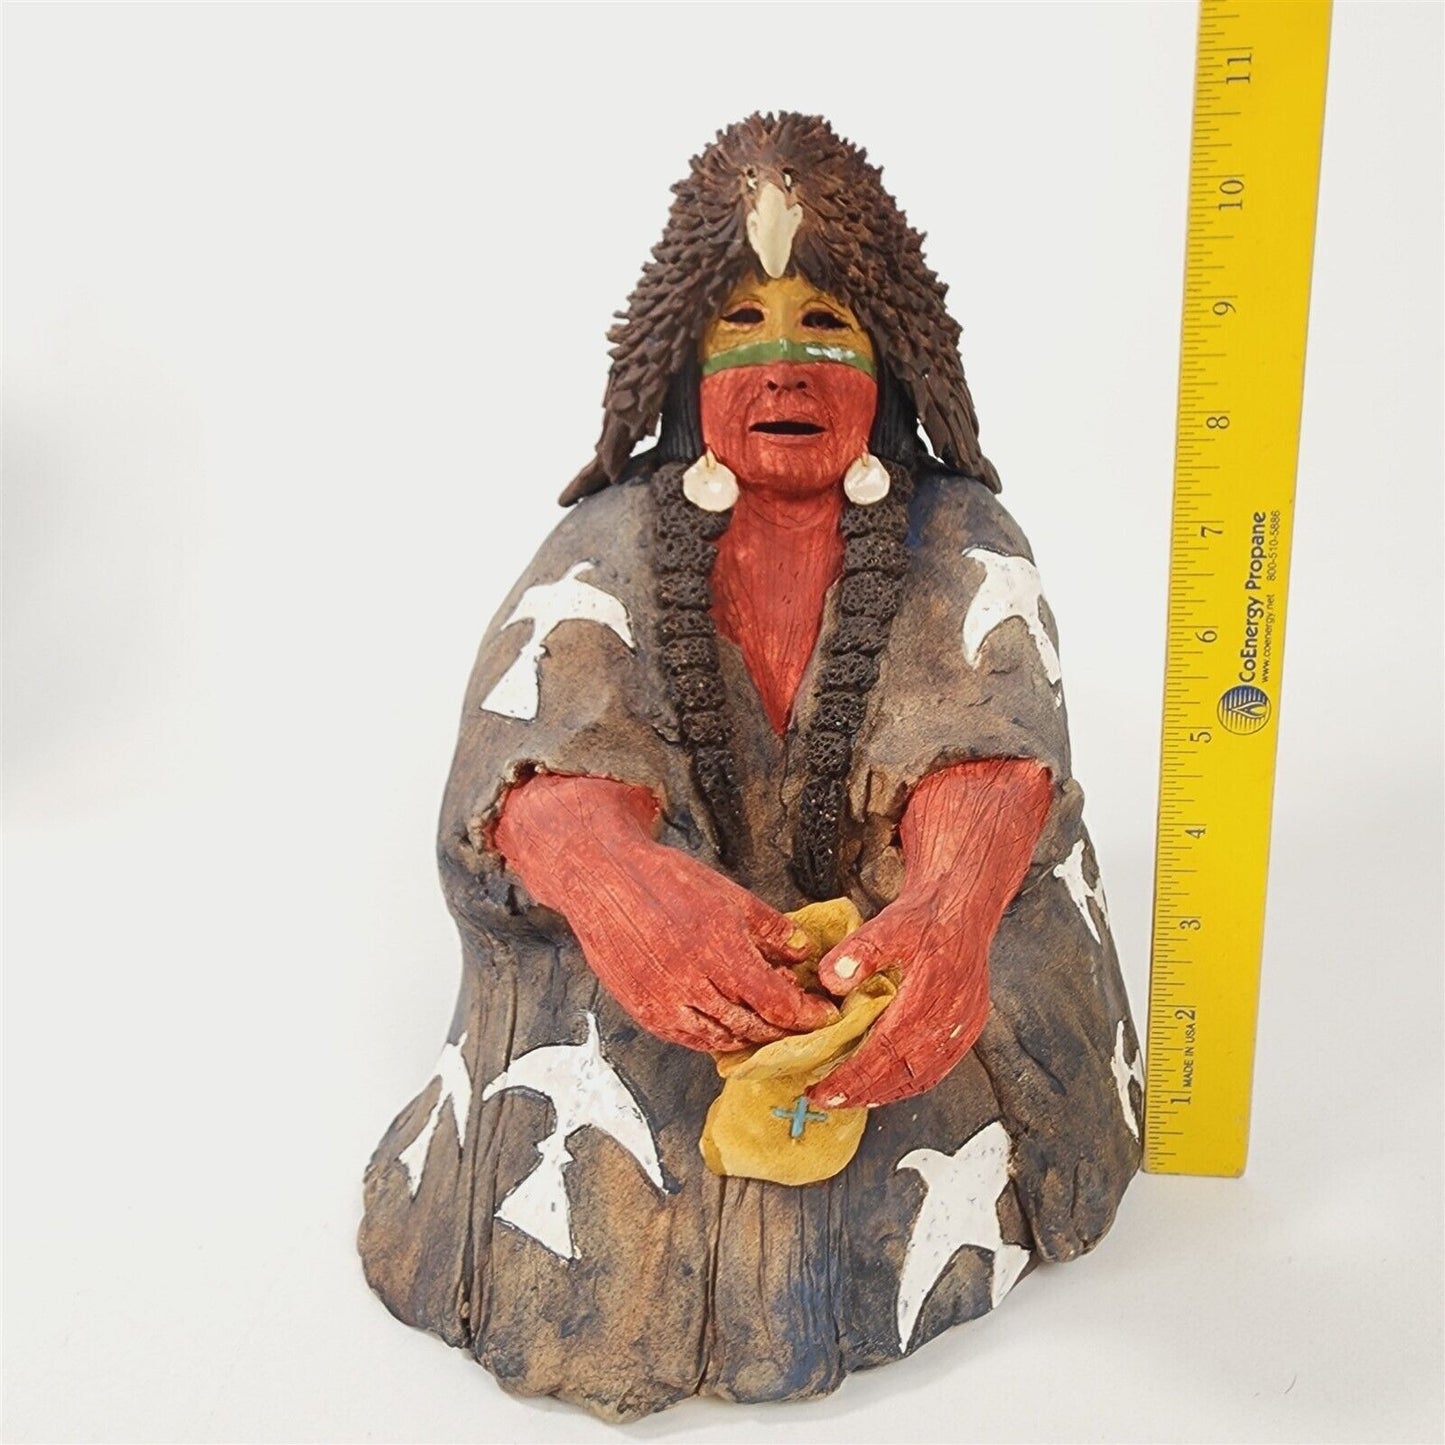 Glen LaFontaine Native American Art Pottery Bird Soldier Figure